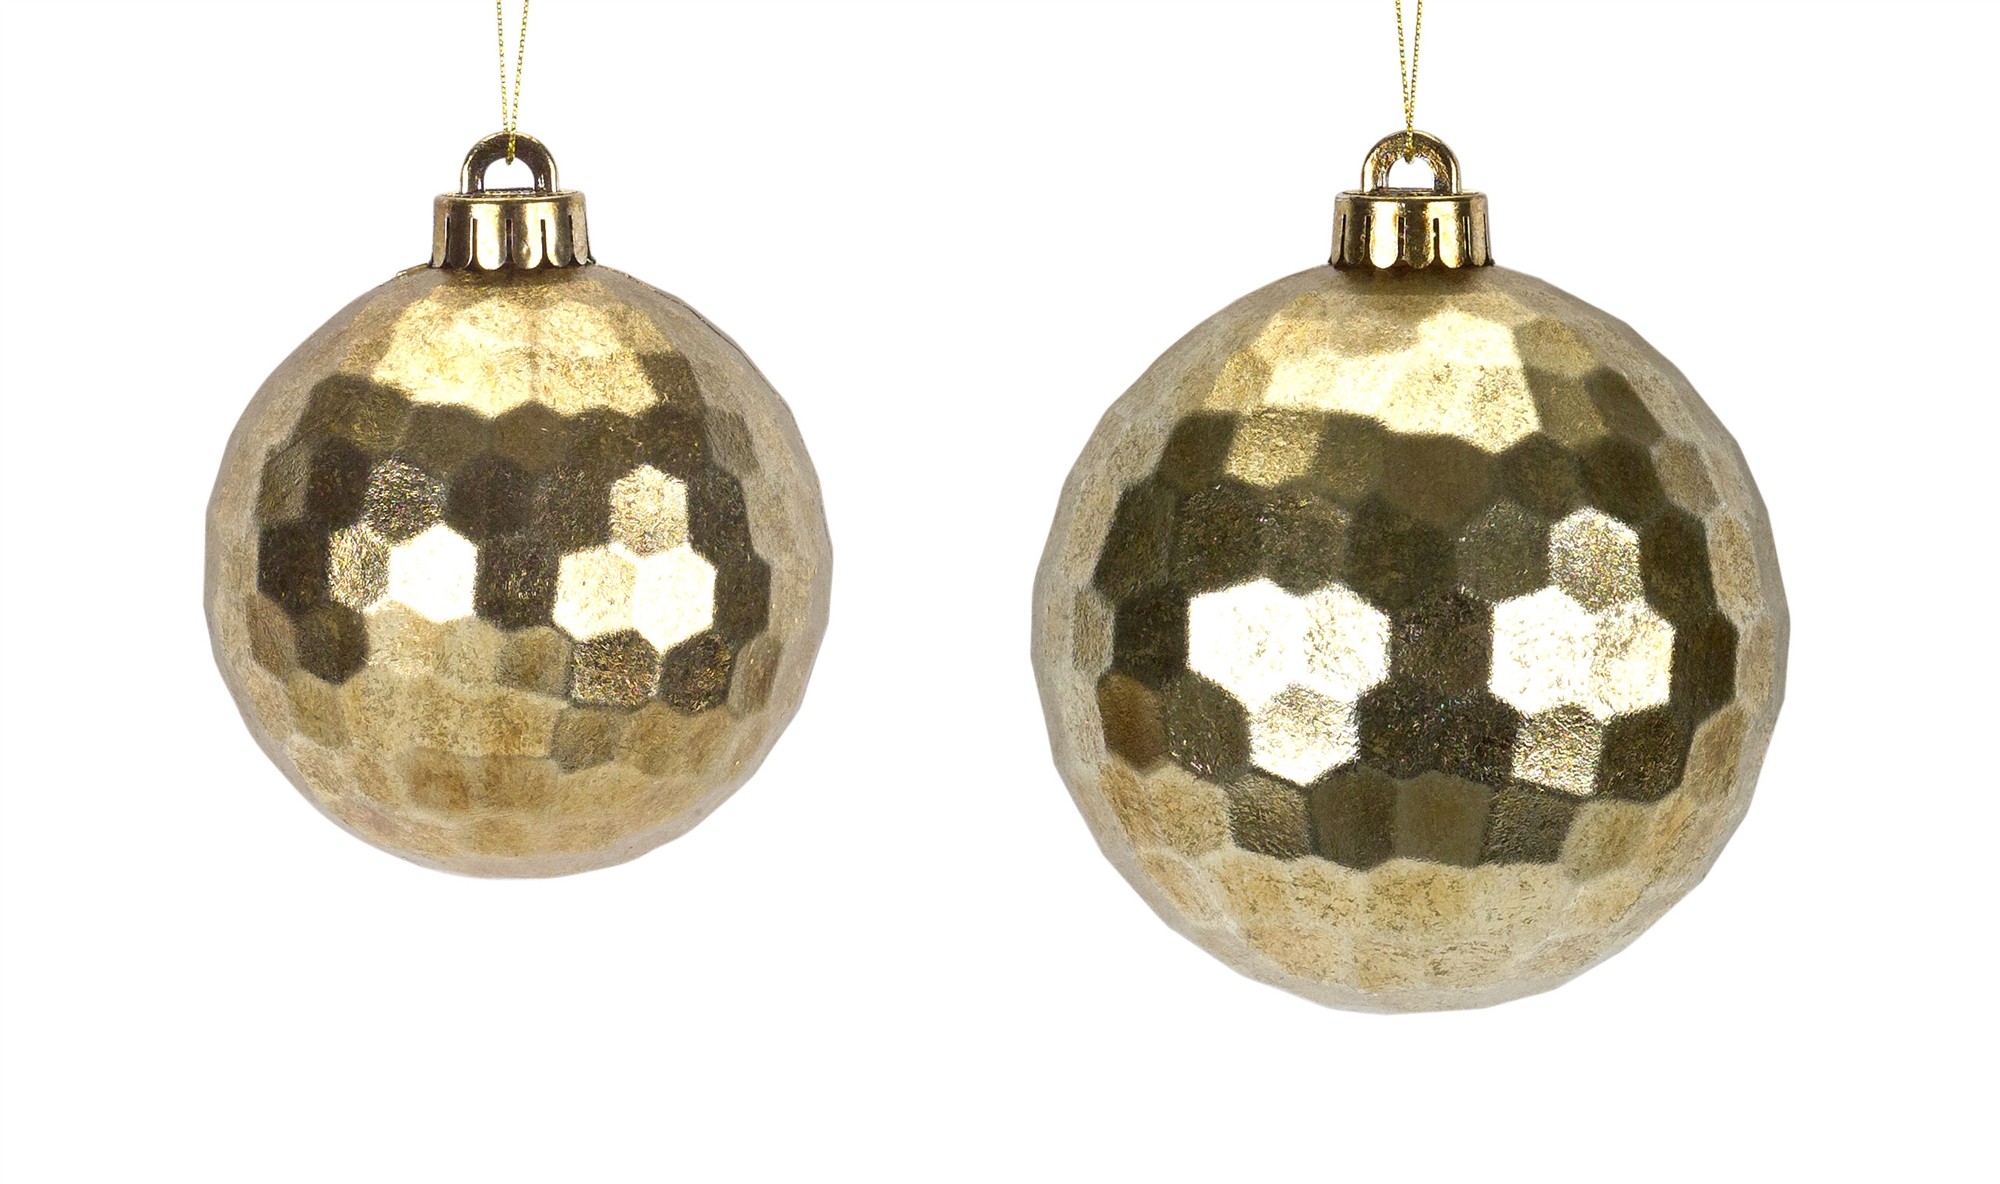 Ball Ornament (Set of 6) 4.75"H, 5.5"H Plastic